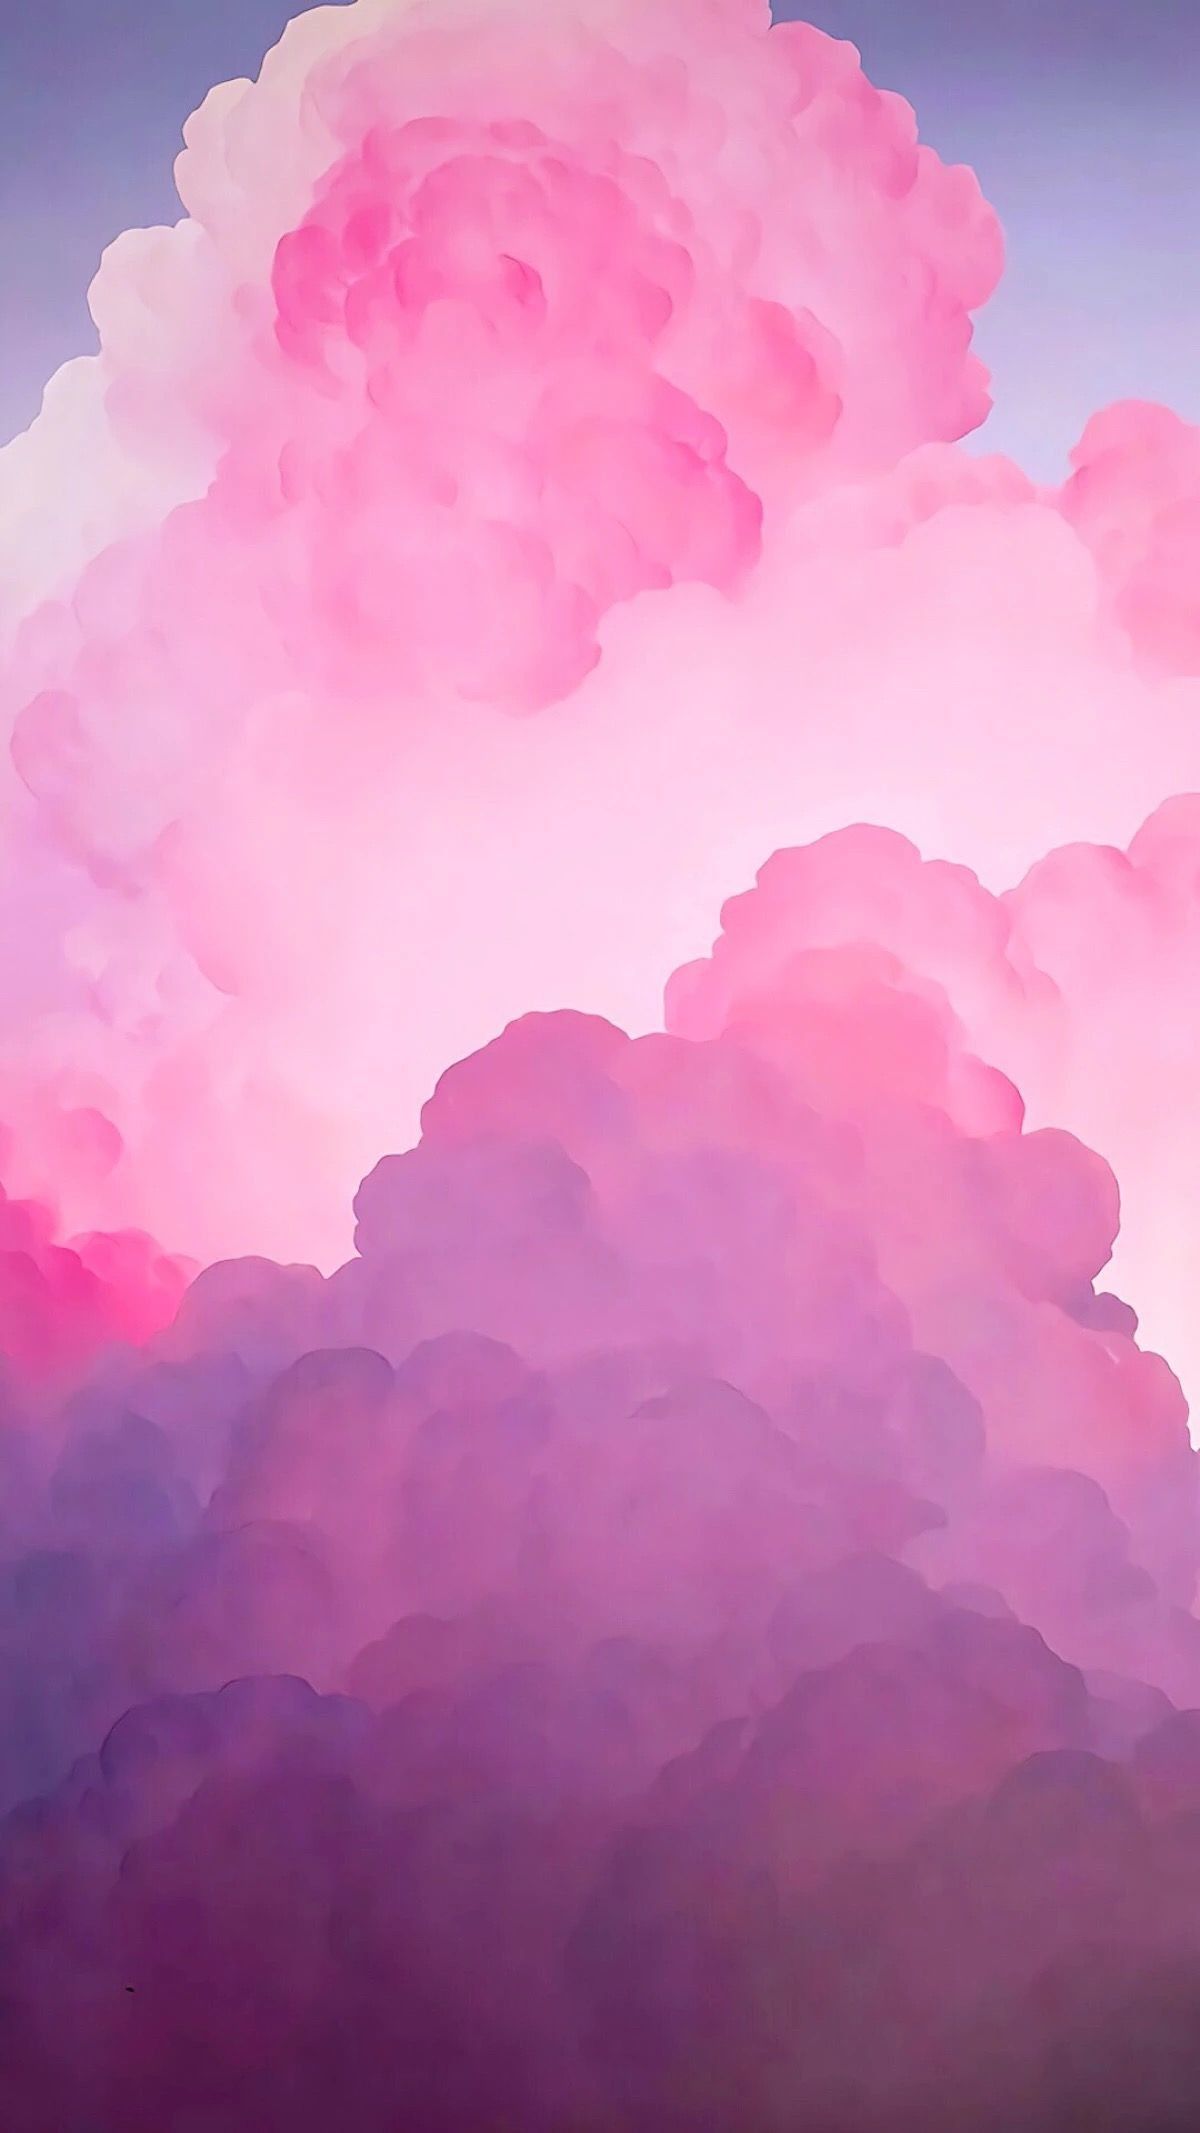 1200x Colorful Clouds, Pink Clouds, Cloud Wallpaper, Wallpaper Pink Cloud